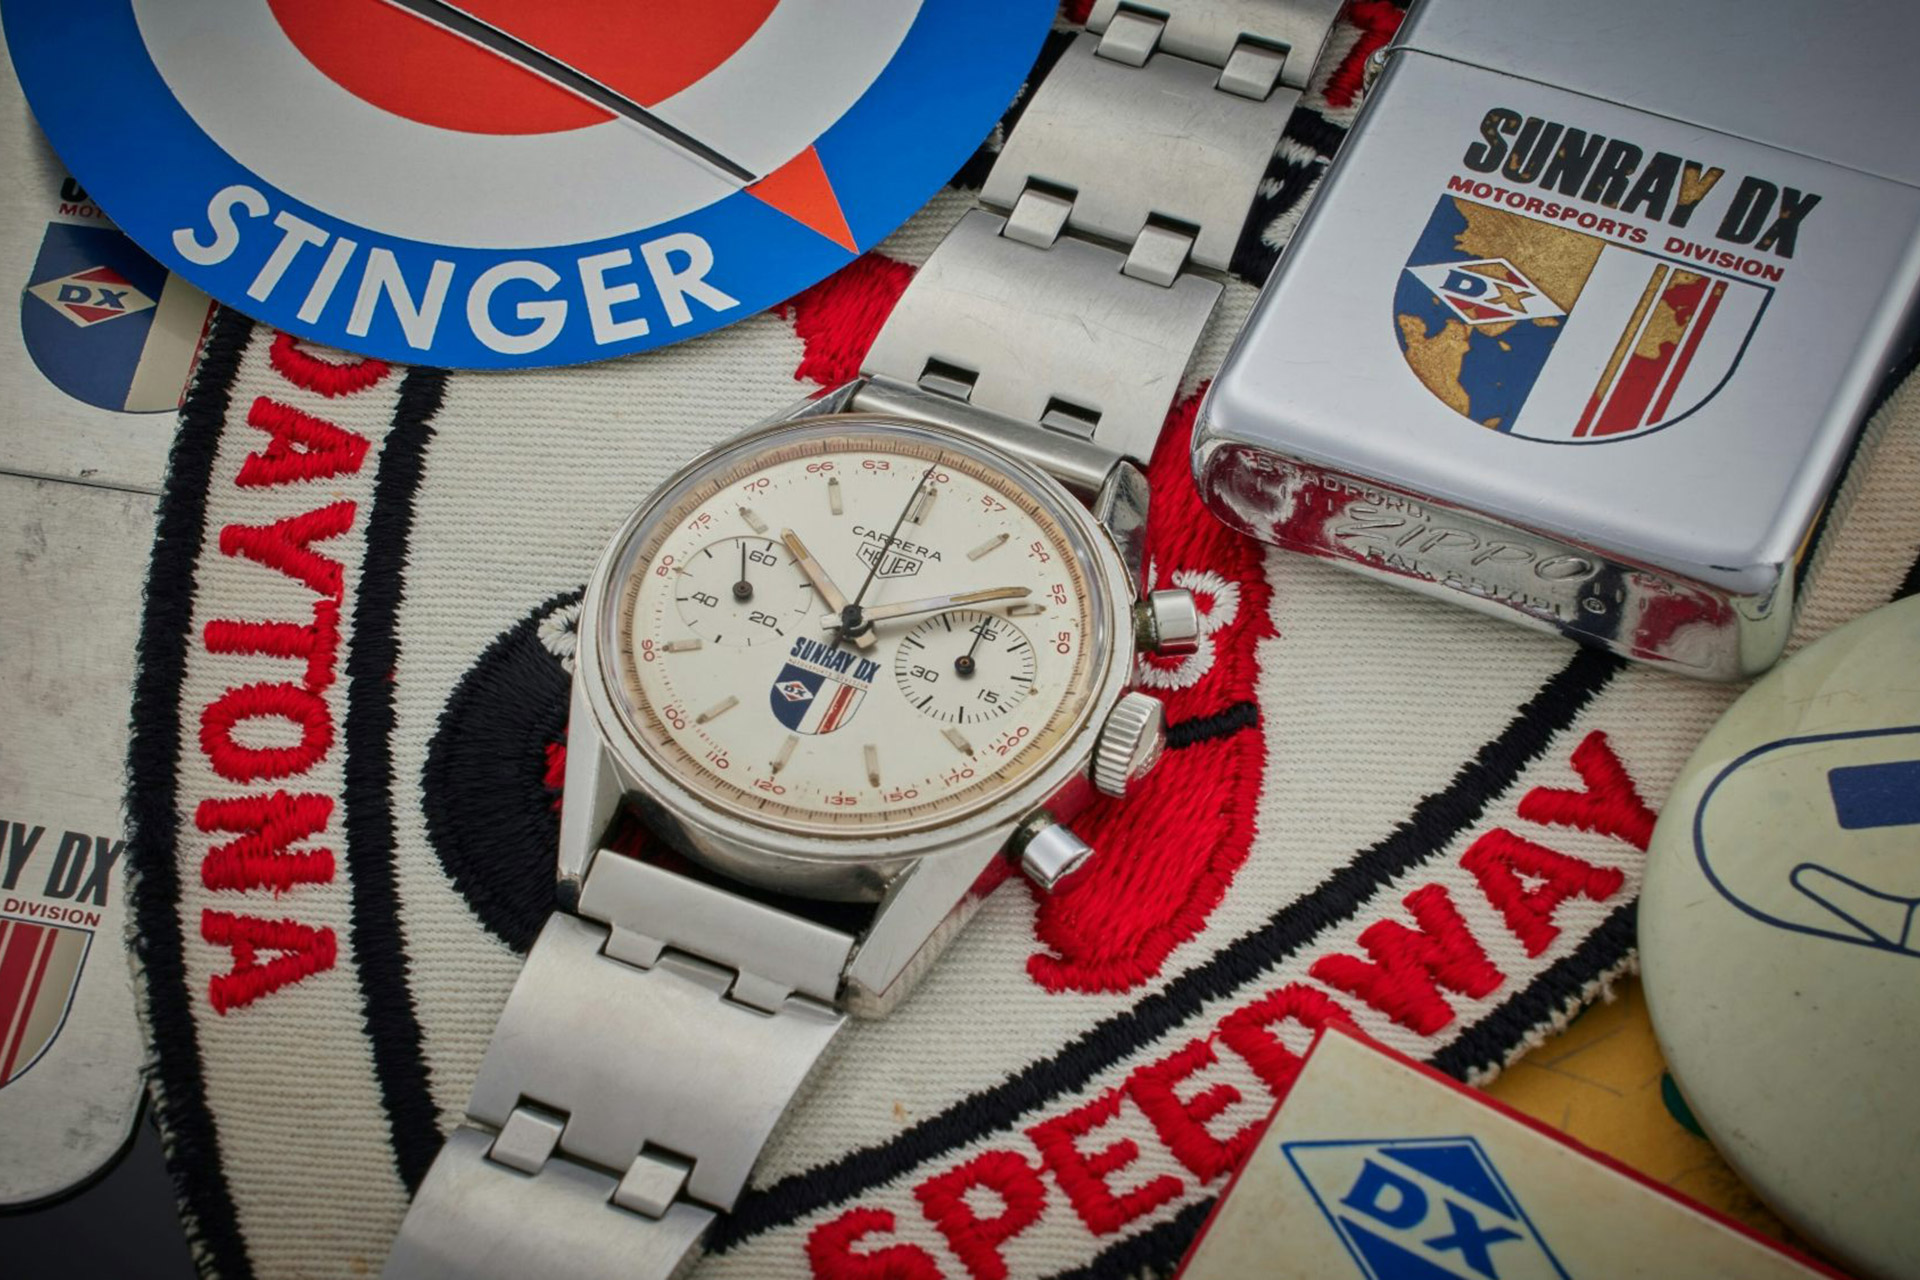 1967 Heuer Carrera Sunray DX Watch, #Heuer #Carrera #Sunray #Watch